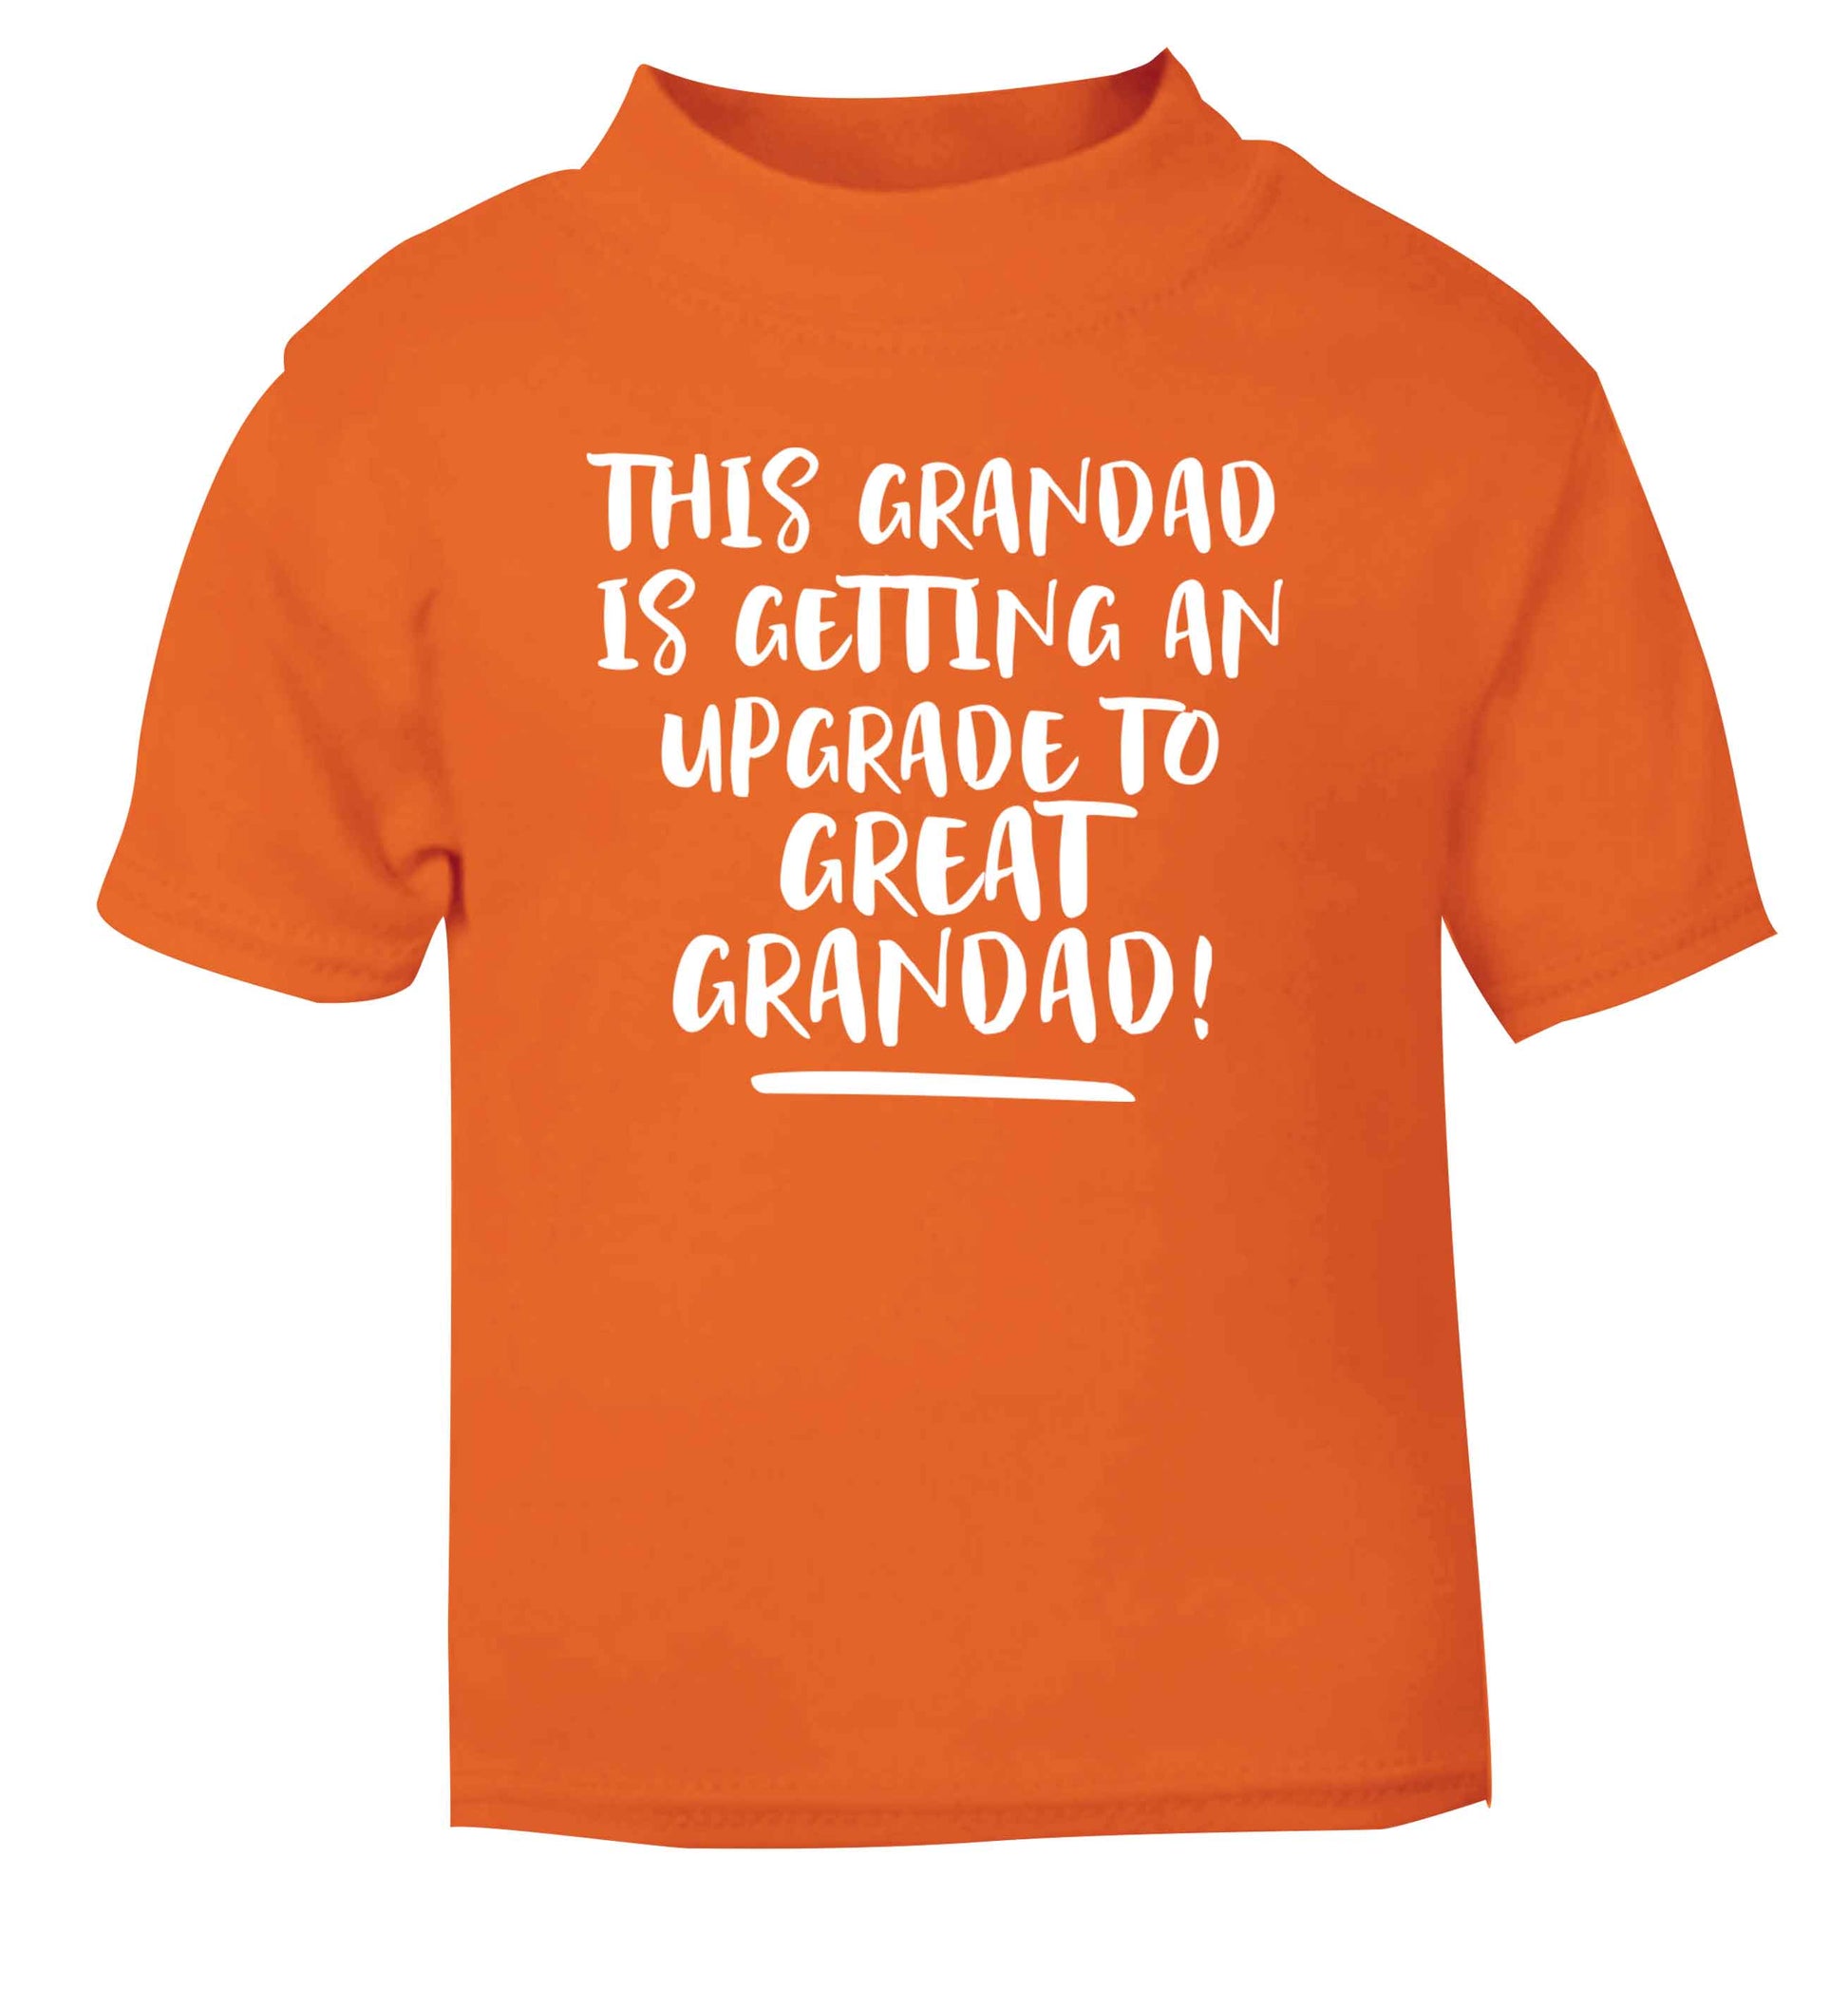 This grandad is getting an upgrade to great grandad! orange Baby Toddler Tshirt 2 Years